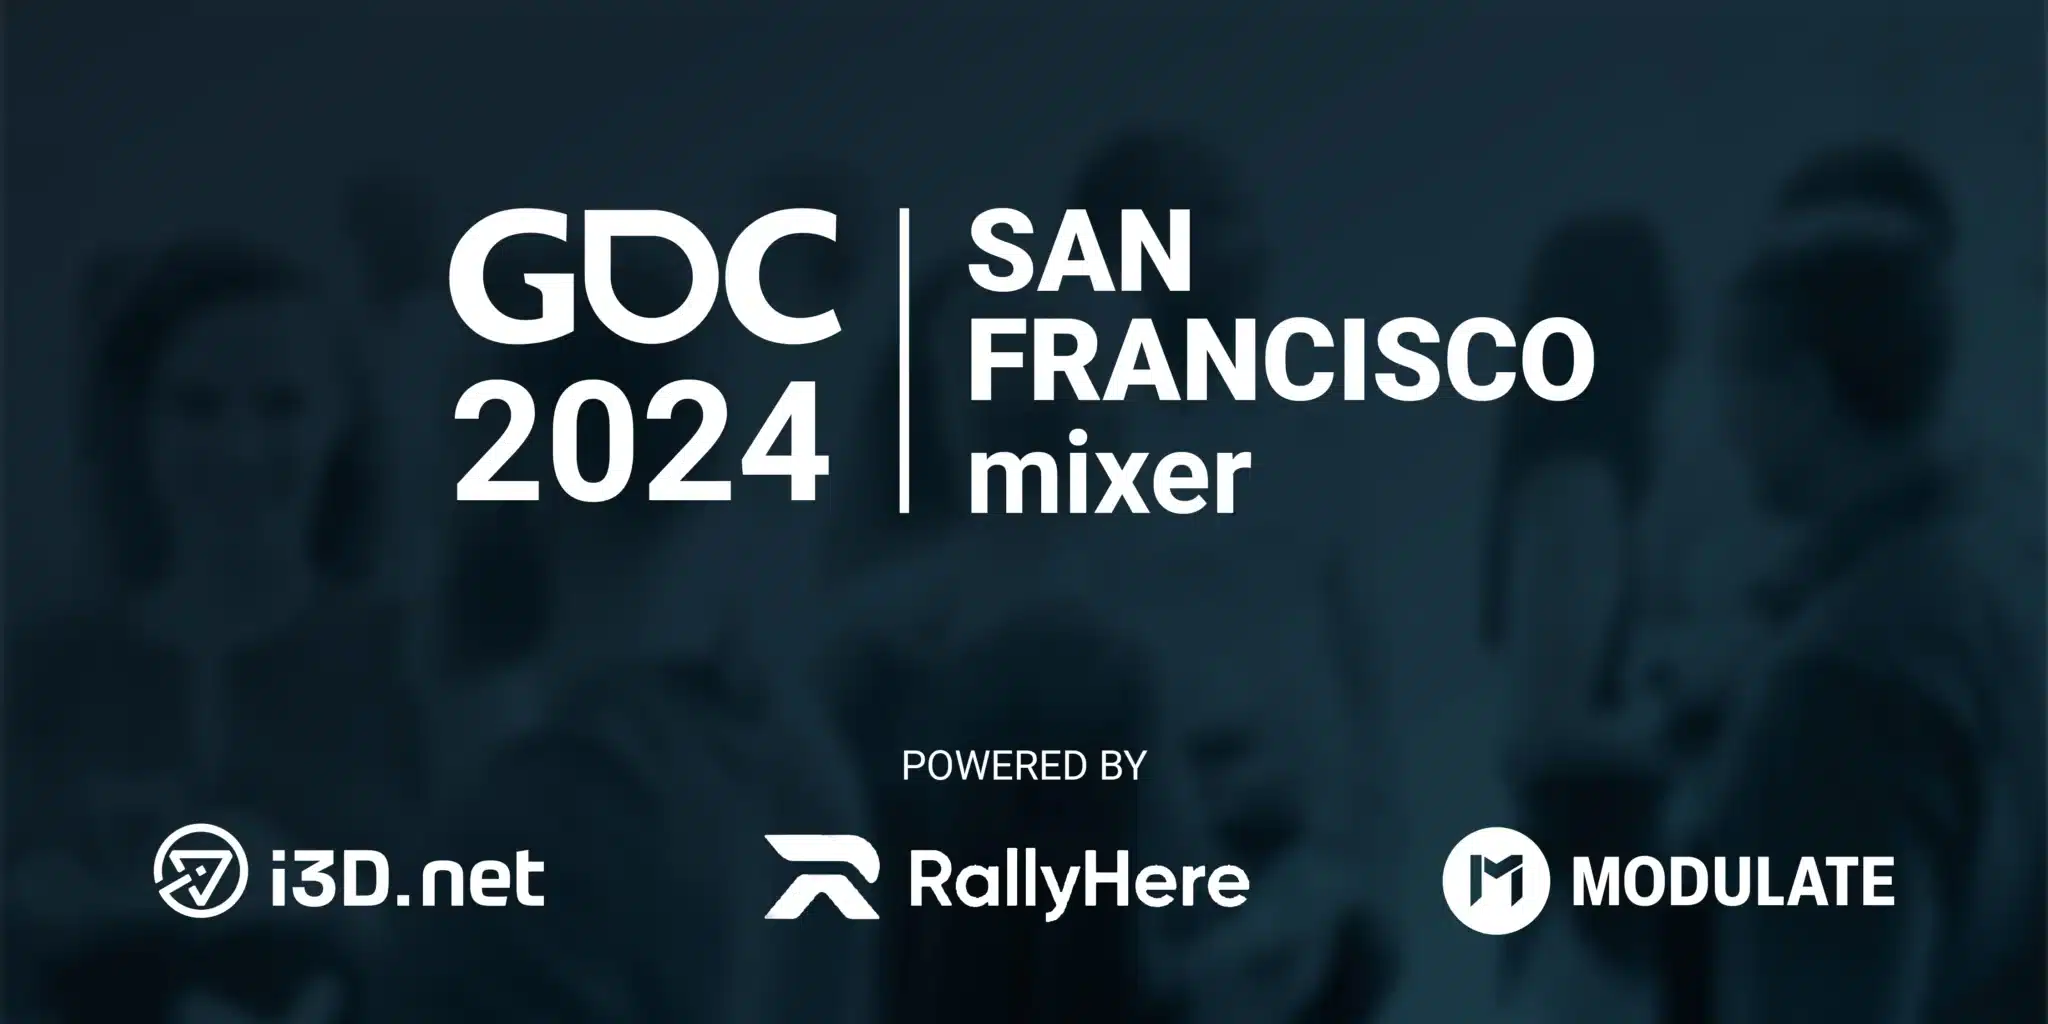 GDC San Francisco 2024 mixer